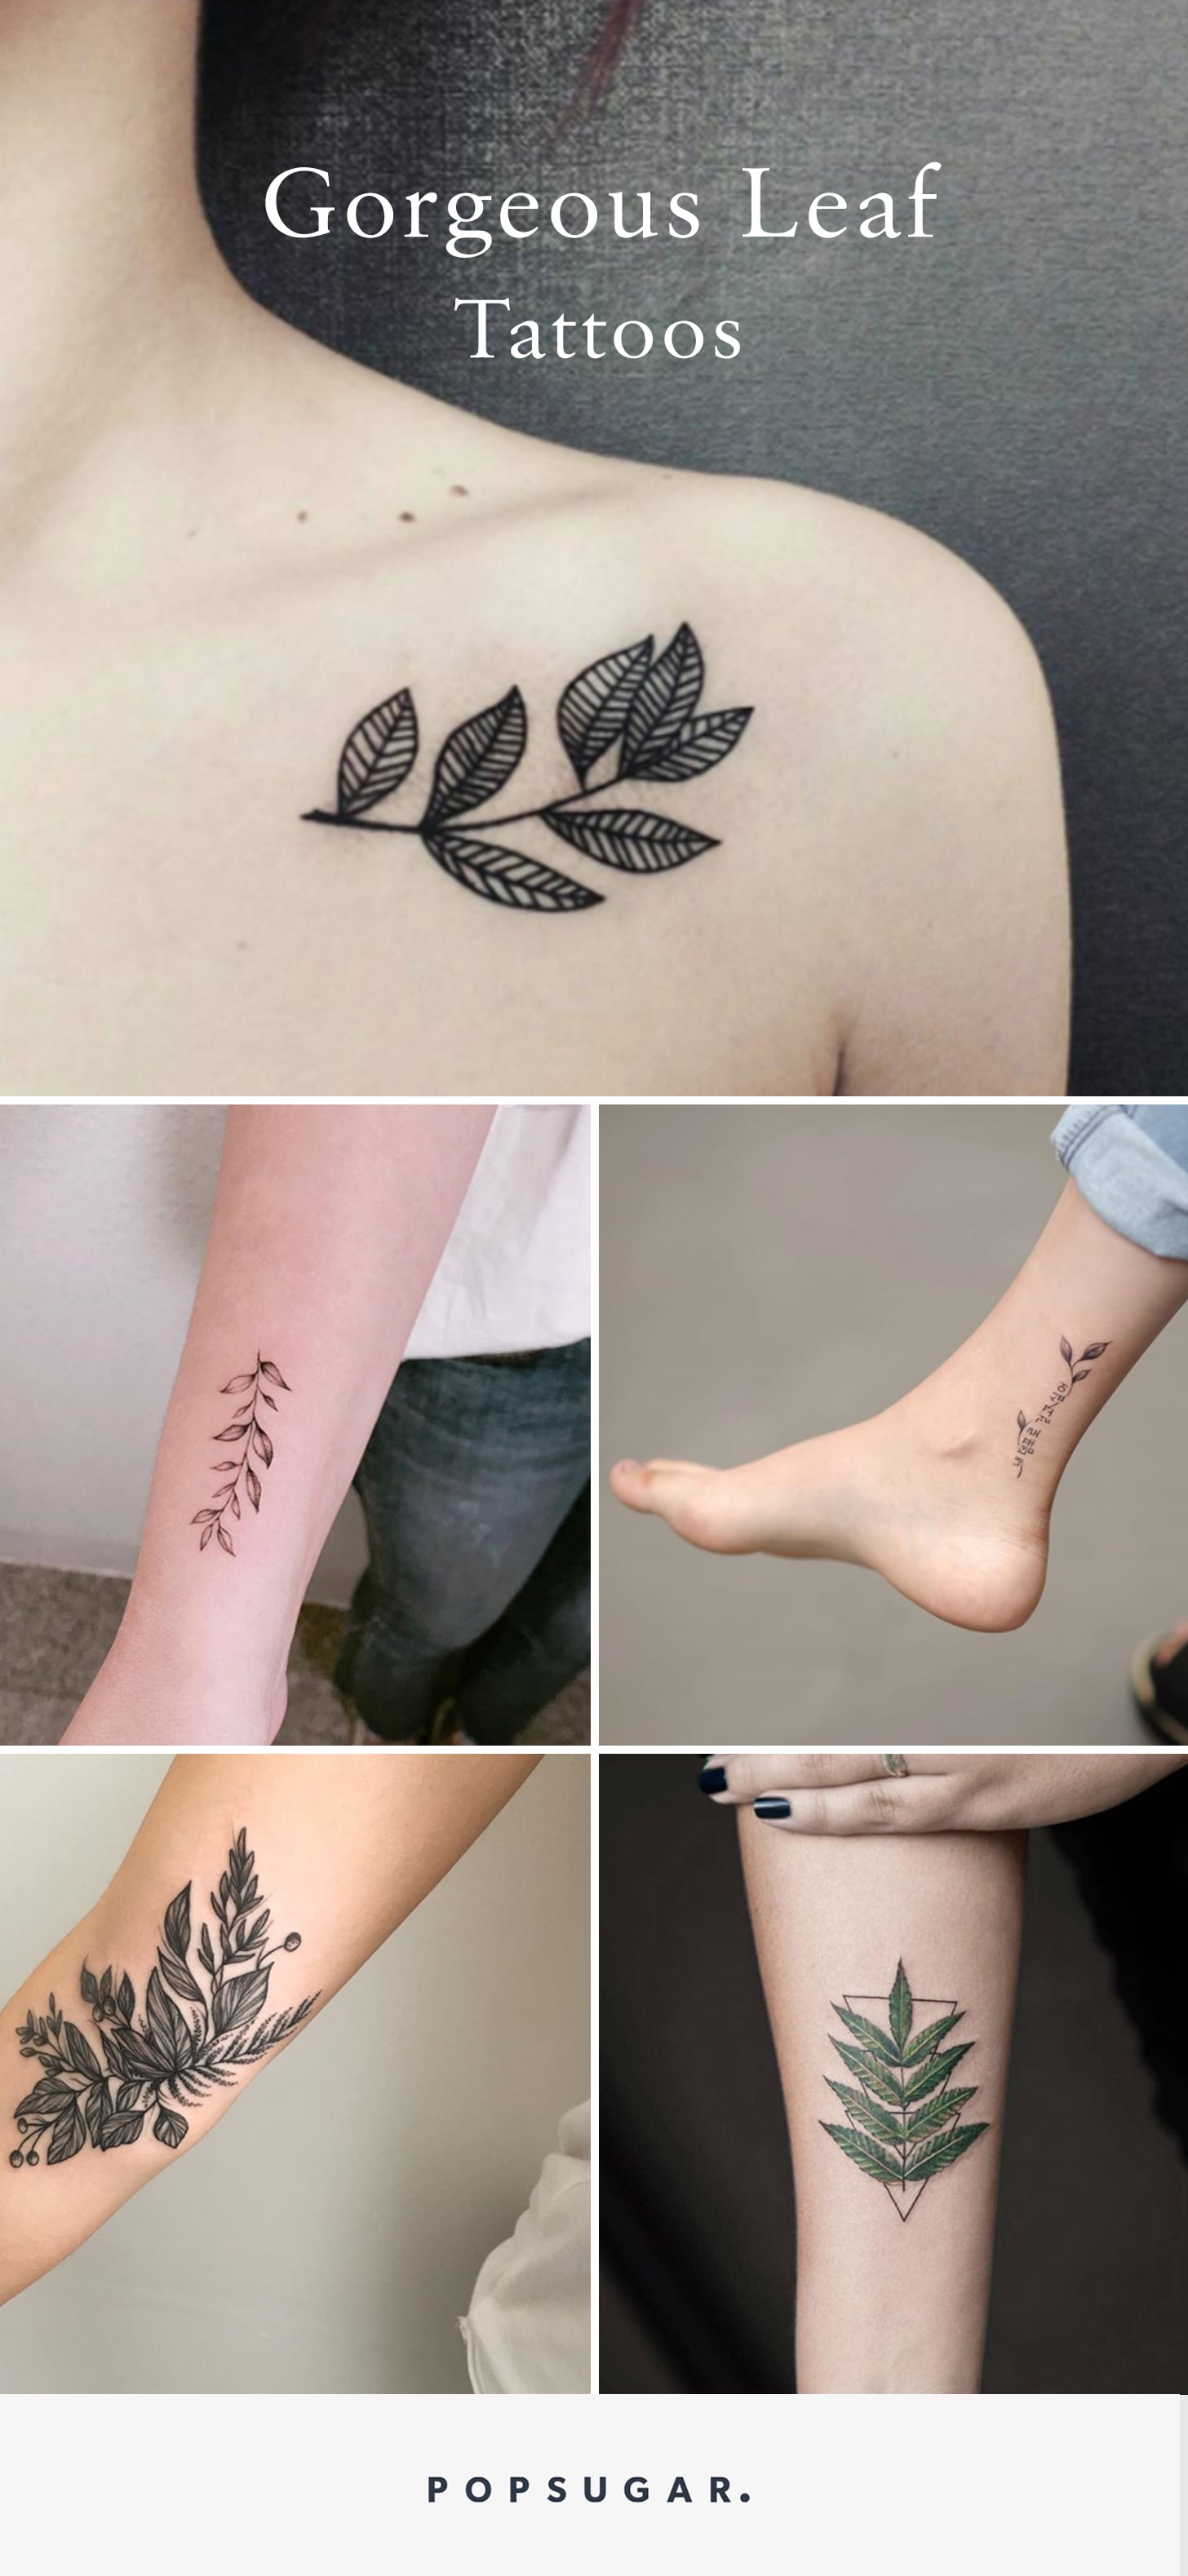 Leaf armband wrist tattoo ideas for women  Tattoo Designs for Women